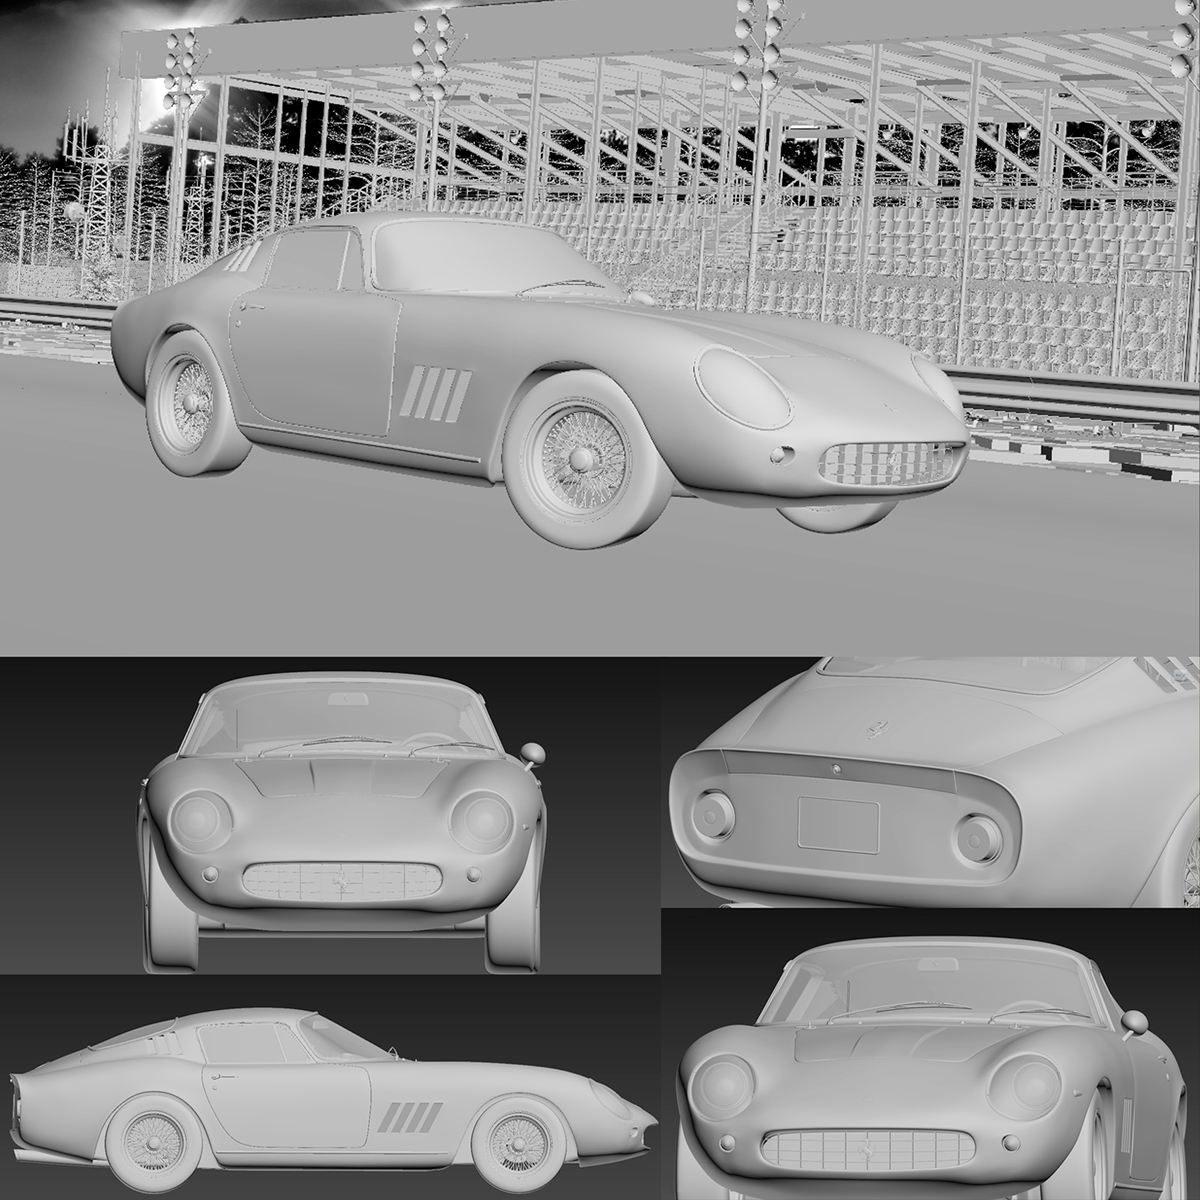 3ds max photoshop 3D Cars vray FERRARI CGI